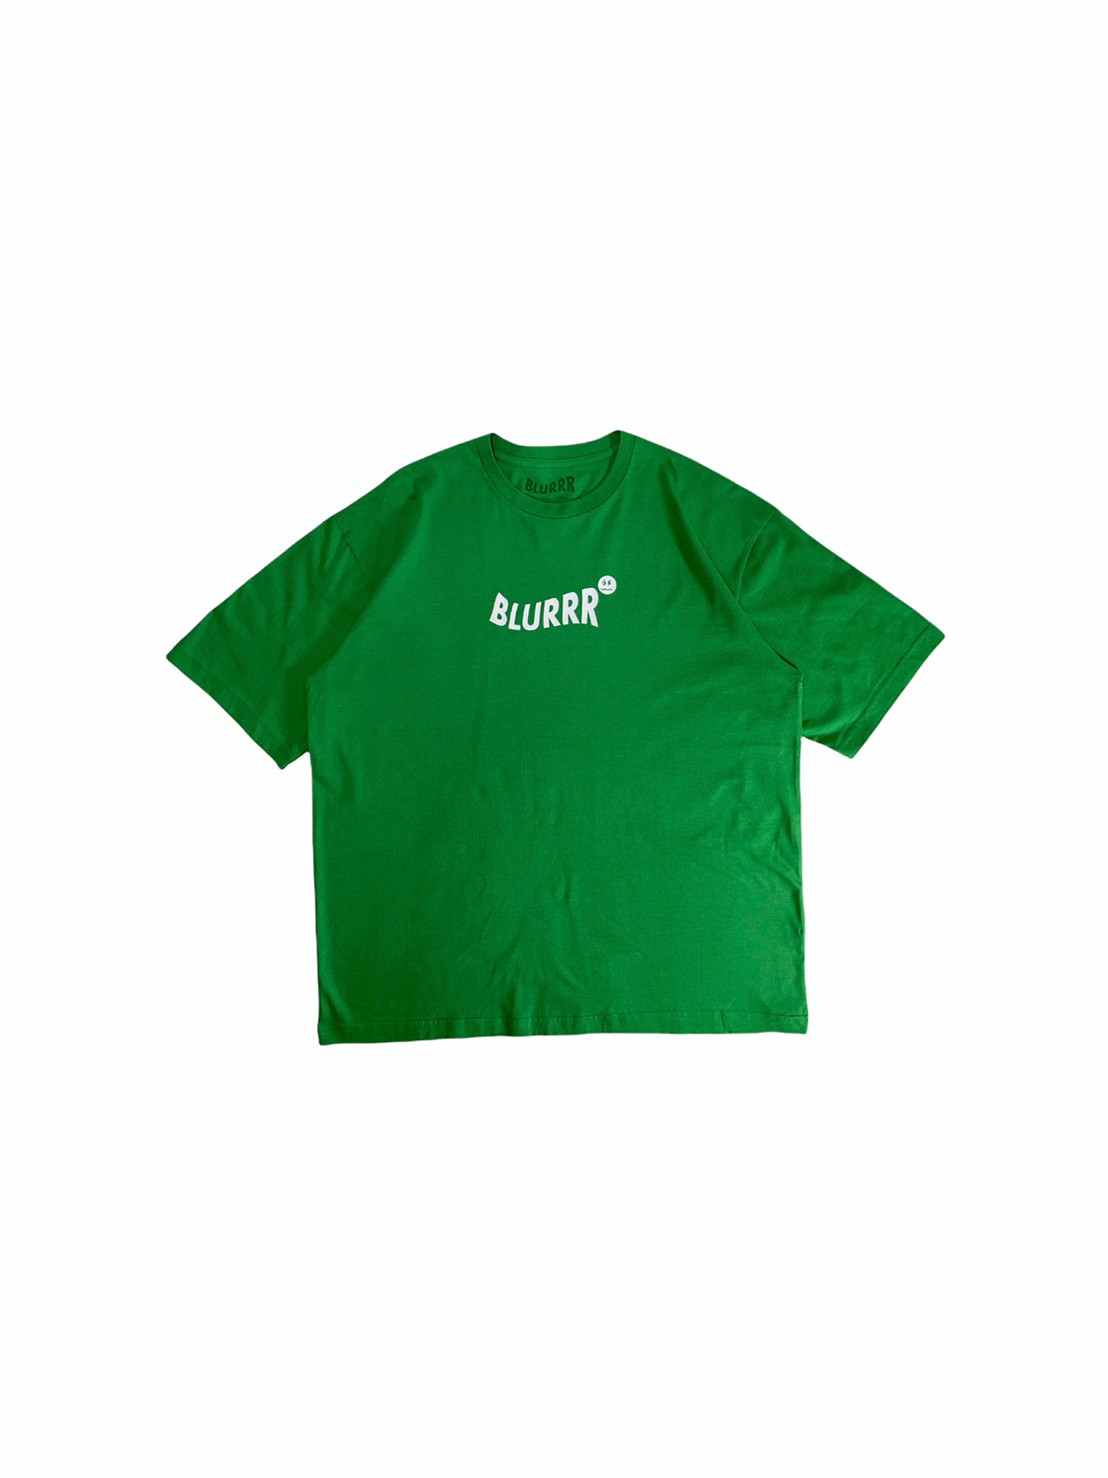 BLURRR Reflex w/ ori logo (green)* Oversized Tee